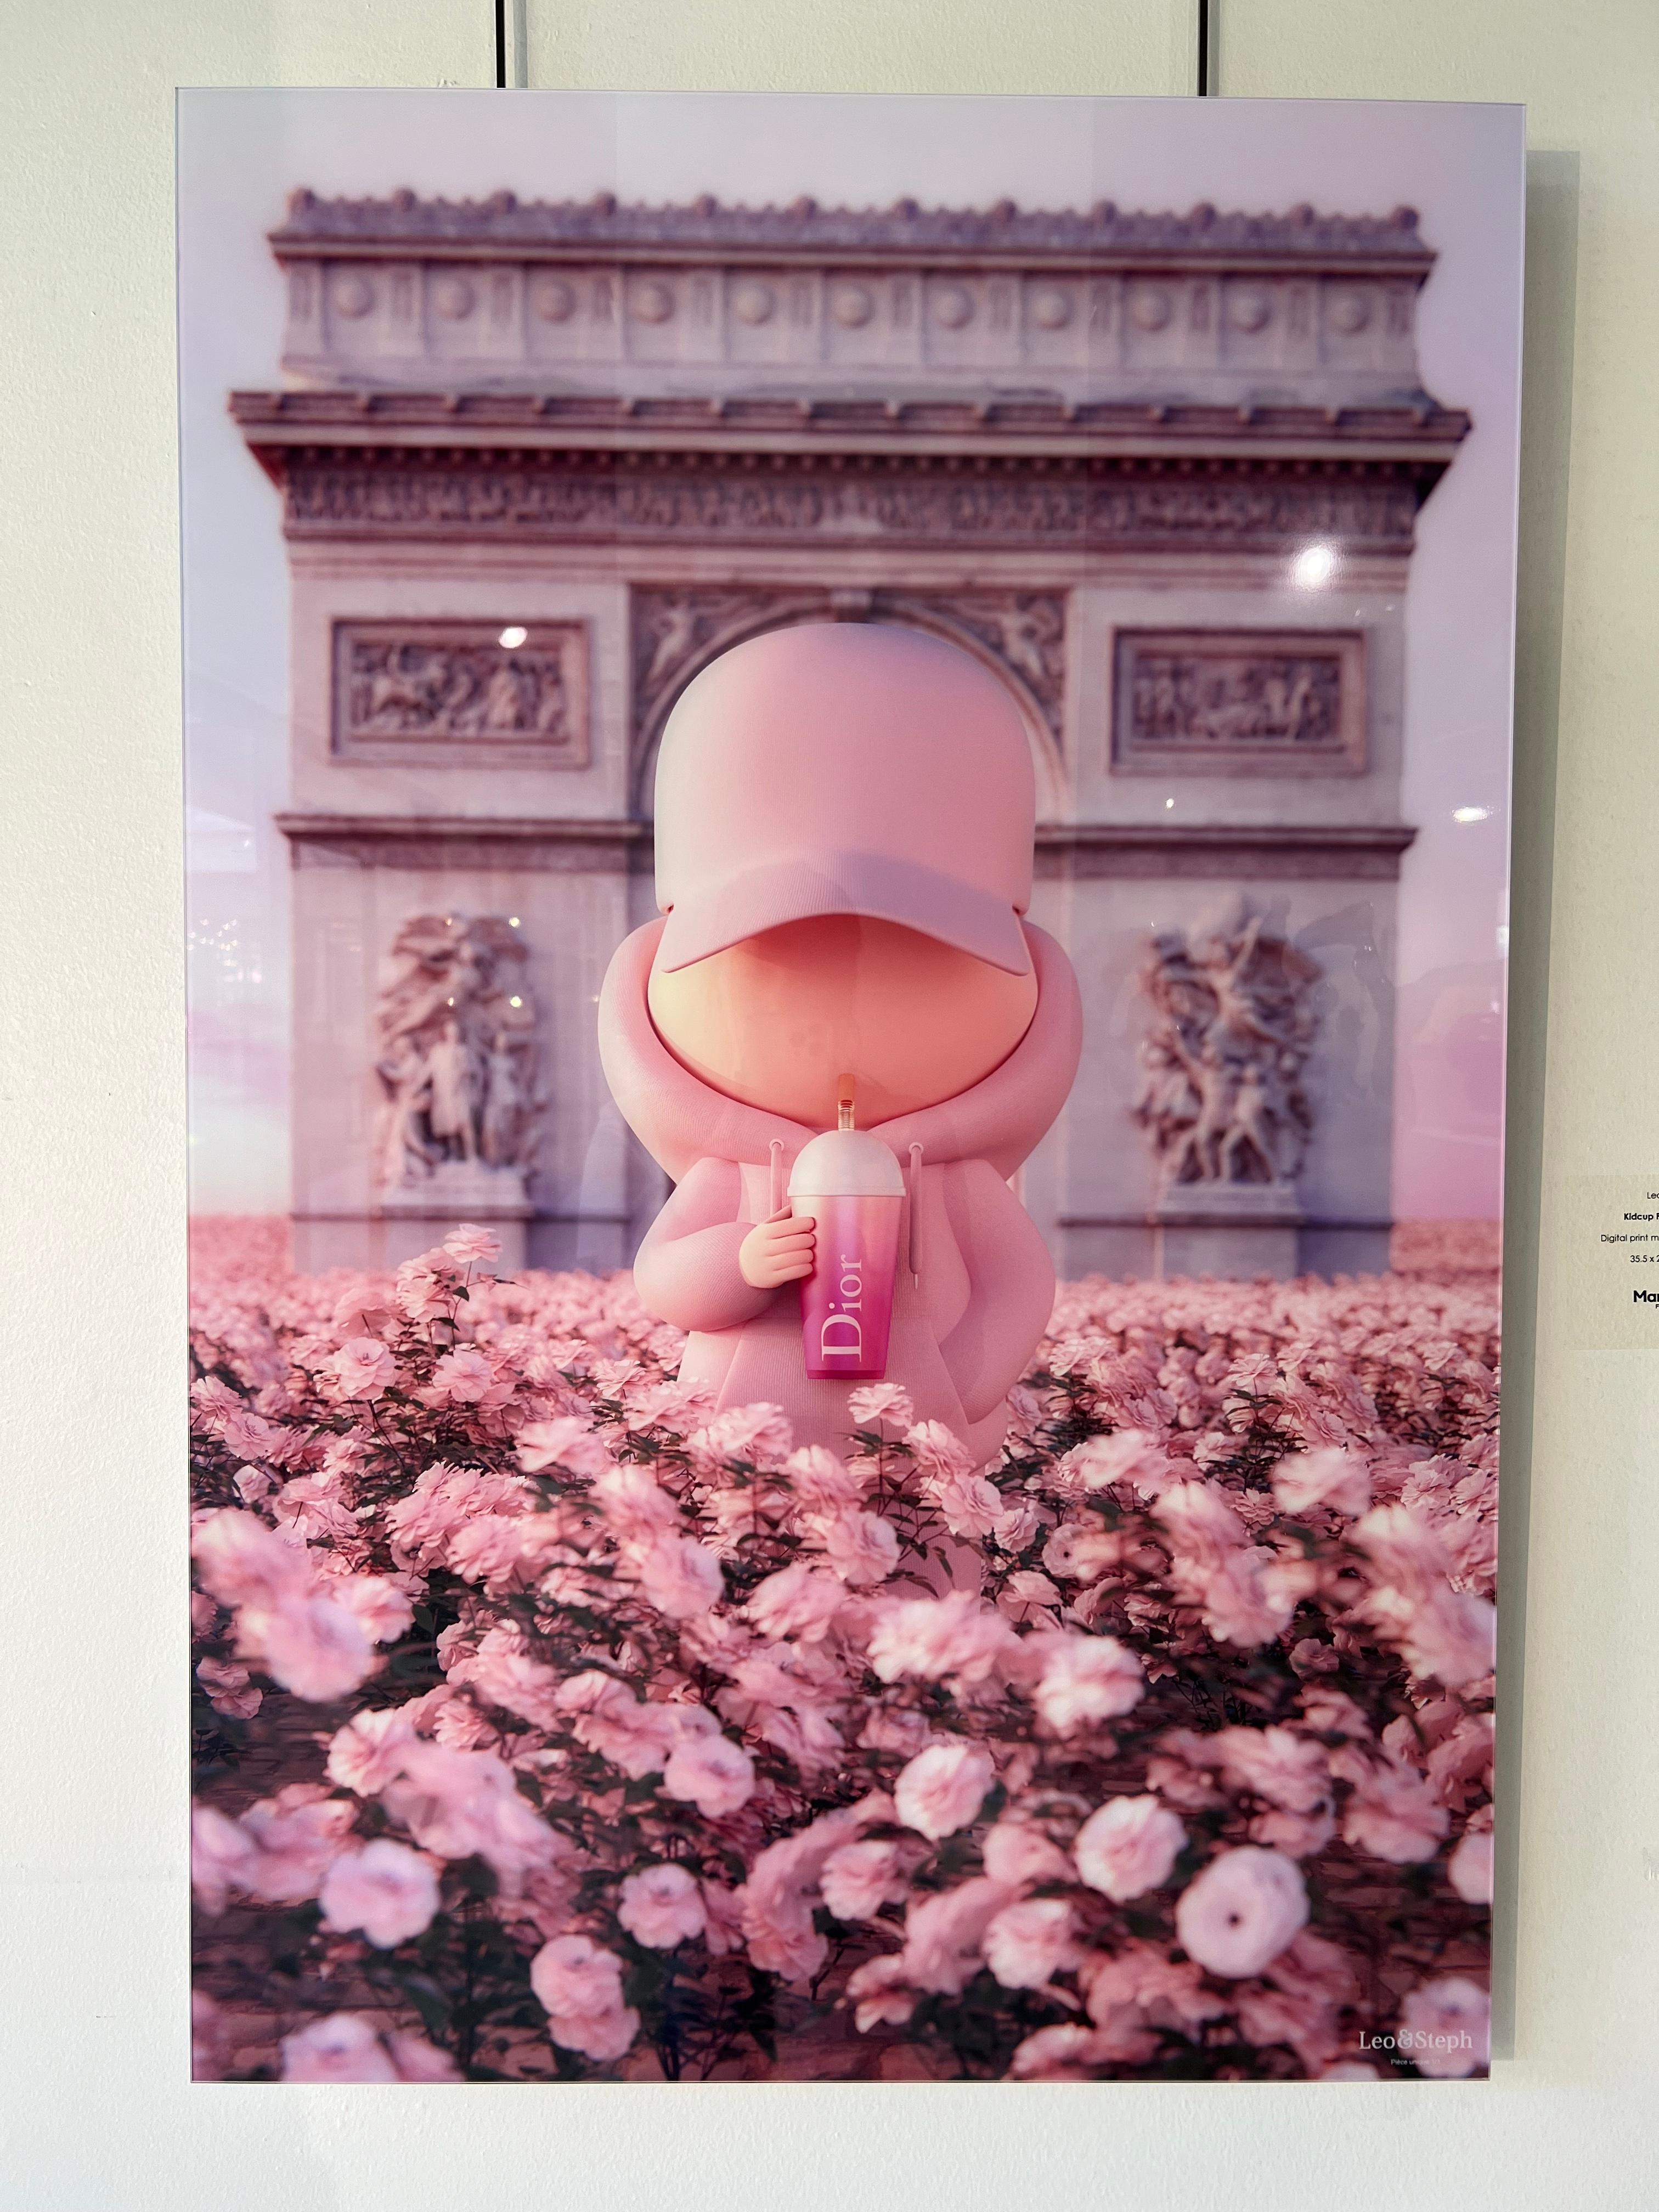 Kidcup Paris - One of a kind - Digital print - Print by Let et Steph